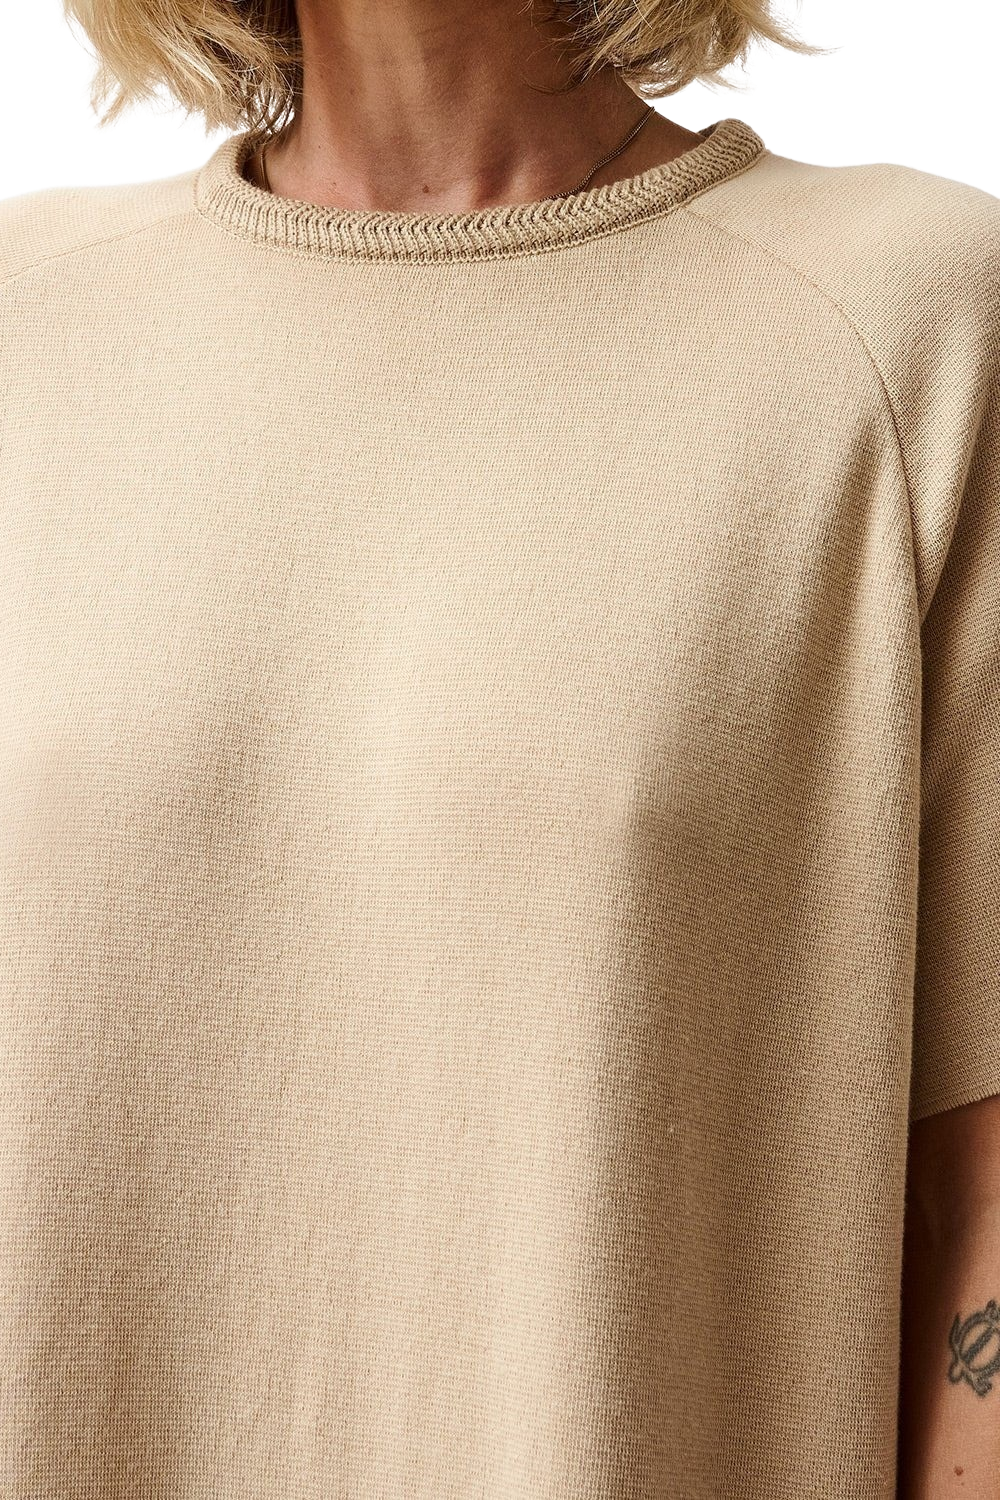 Knitted Herringbone T-Shirt Dress - Sand